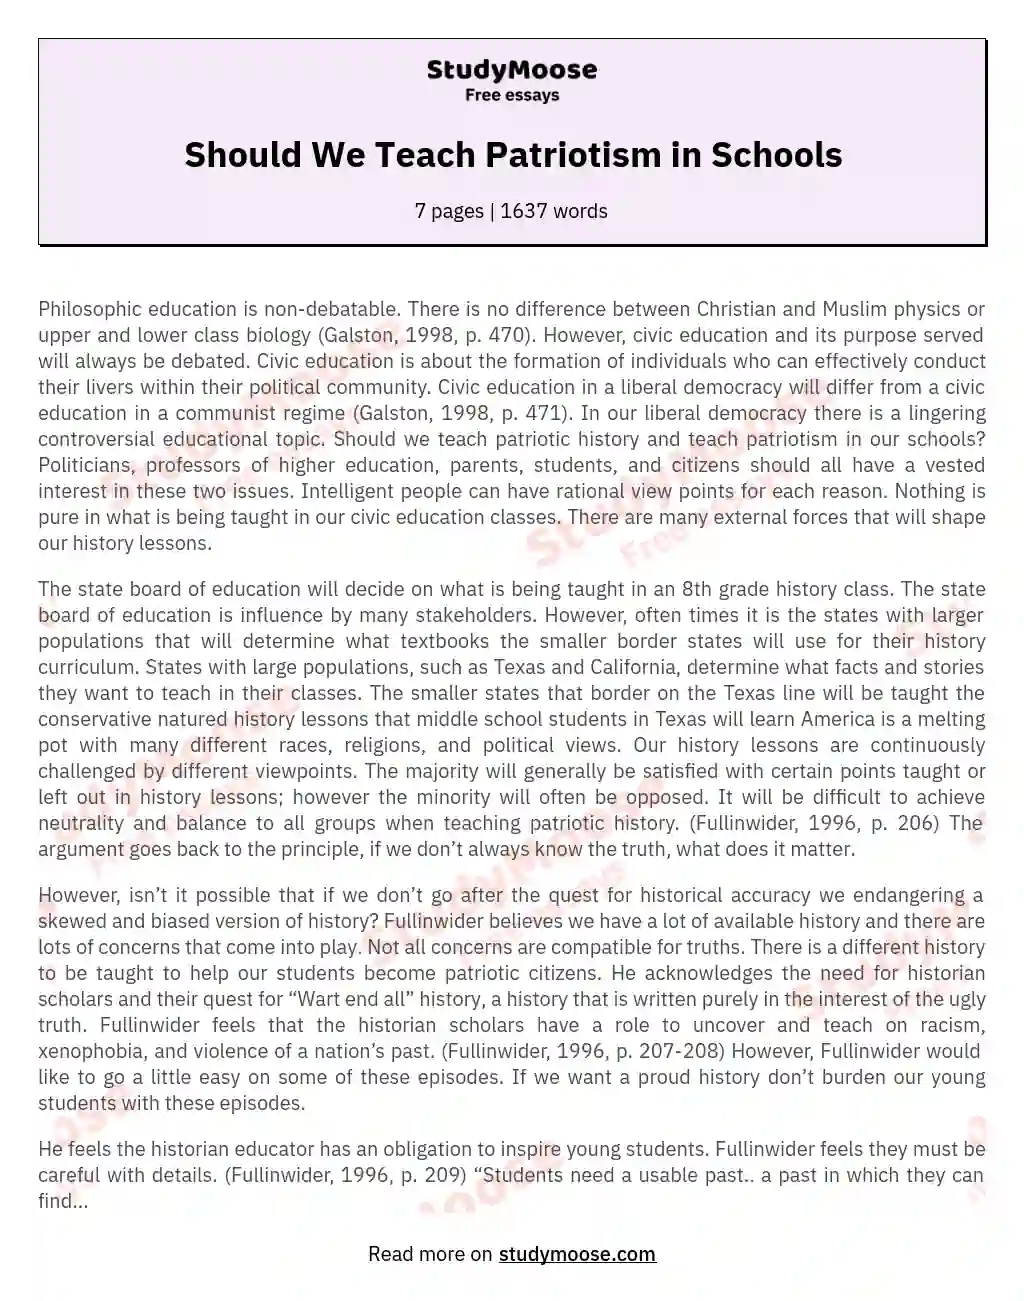 Should We Teach Patriotism in Schools essay